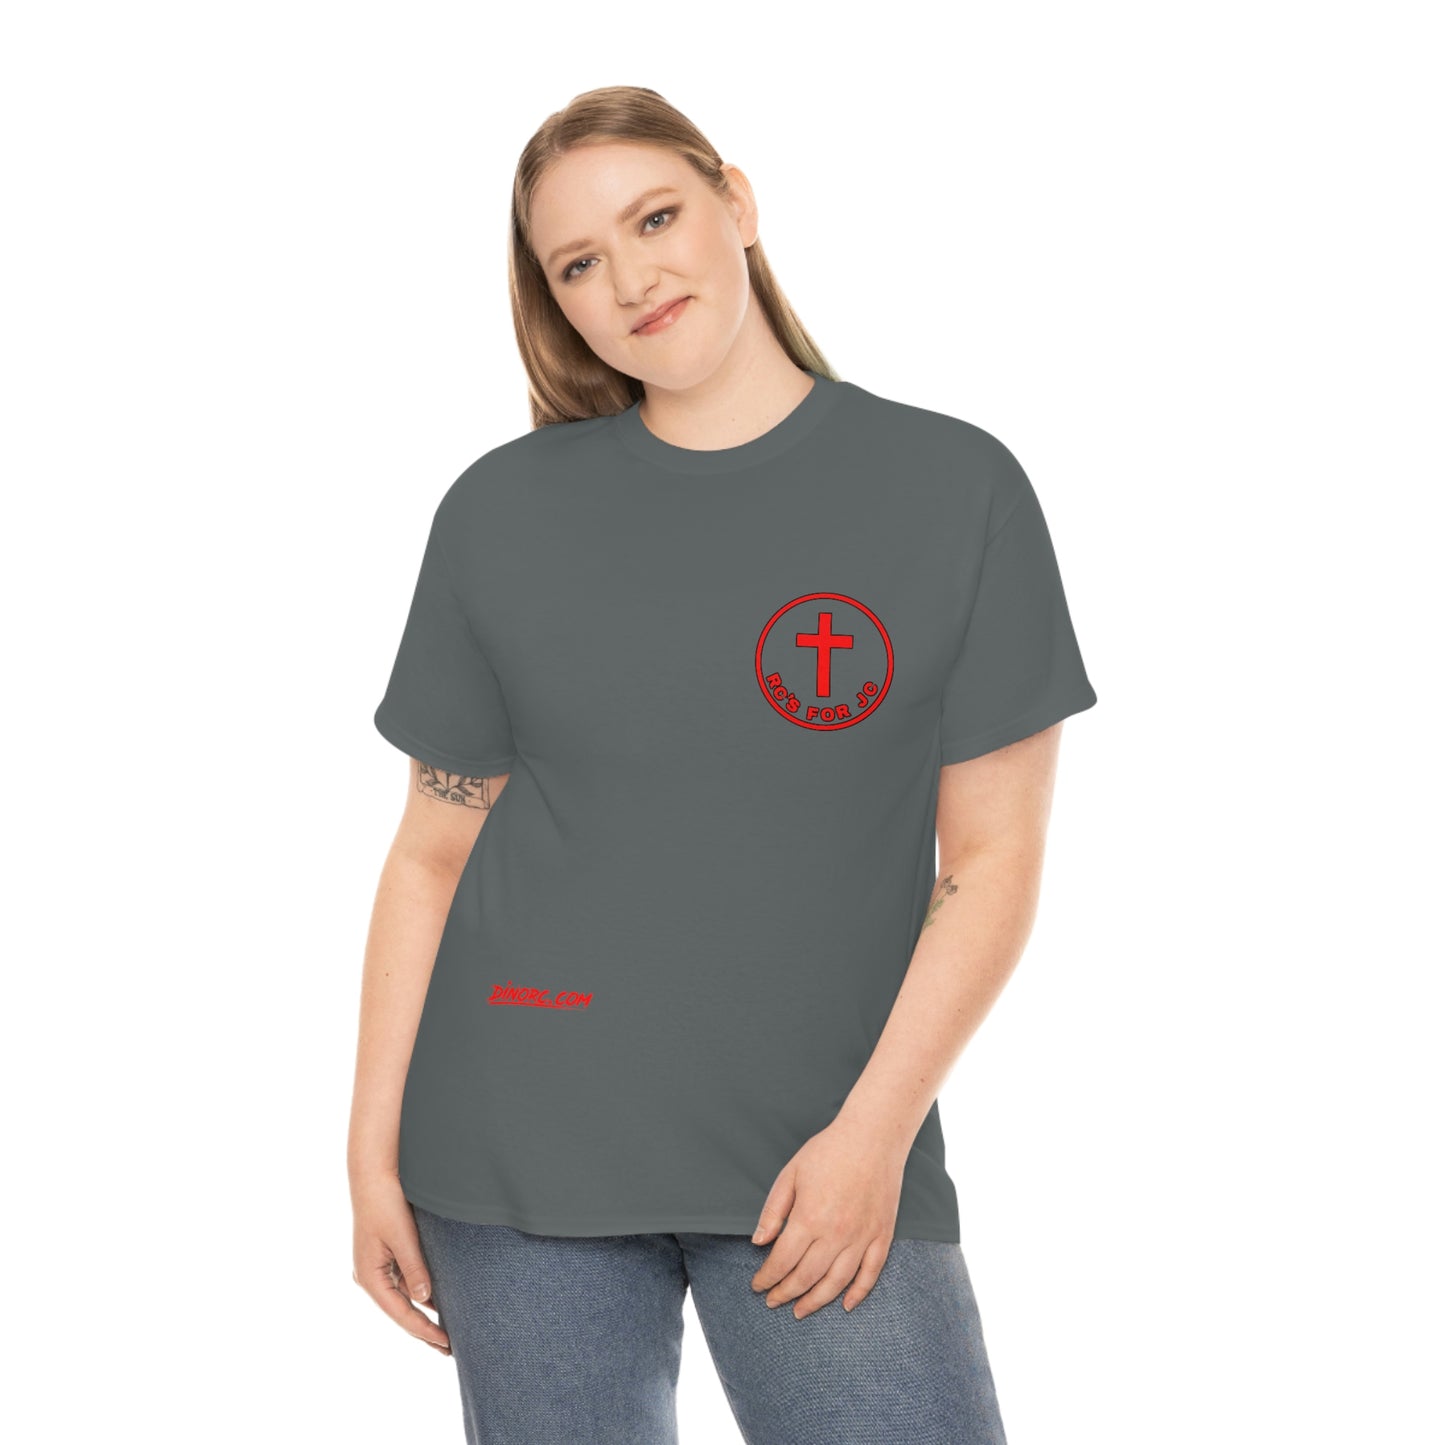 RCSFORJC  Front Back Red Logo T-Shirt S-5x